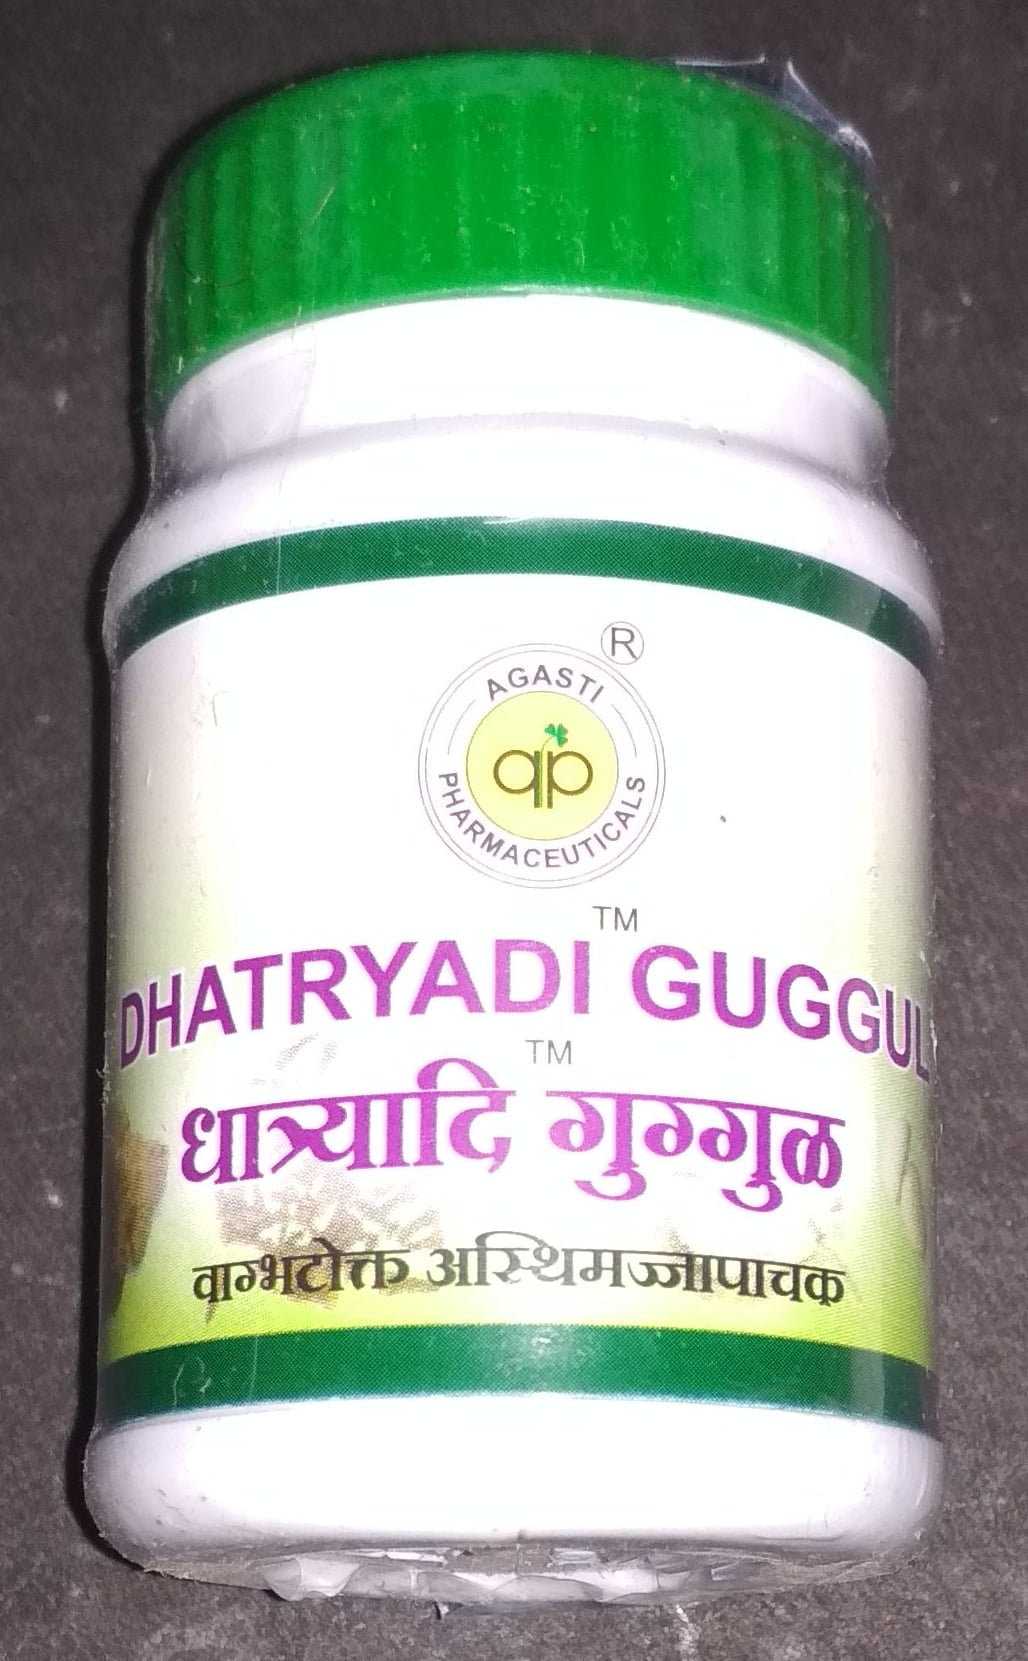 dhatryadi guggul 1kg 4000 tablet upto 15% off agasti pharmaceuticals